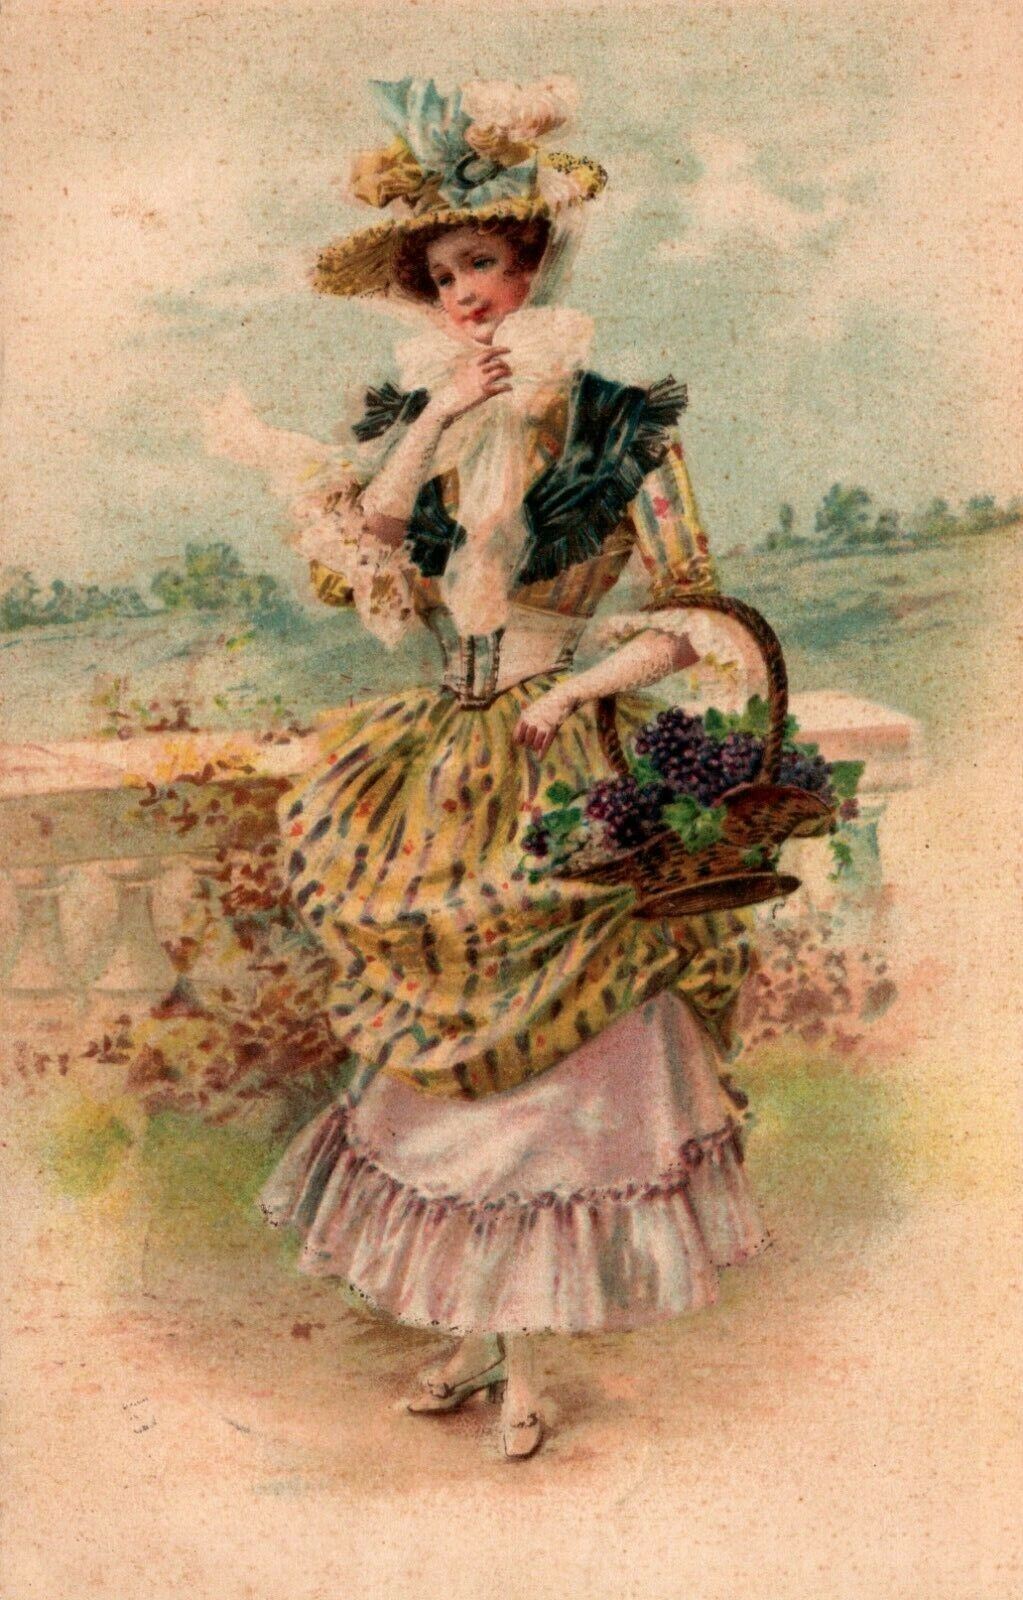 Classy Lady Big Dress Picked Grapes Vintage Postcard 08.80